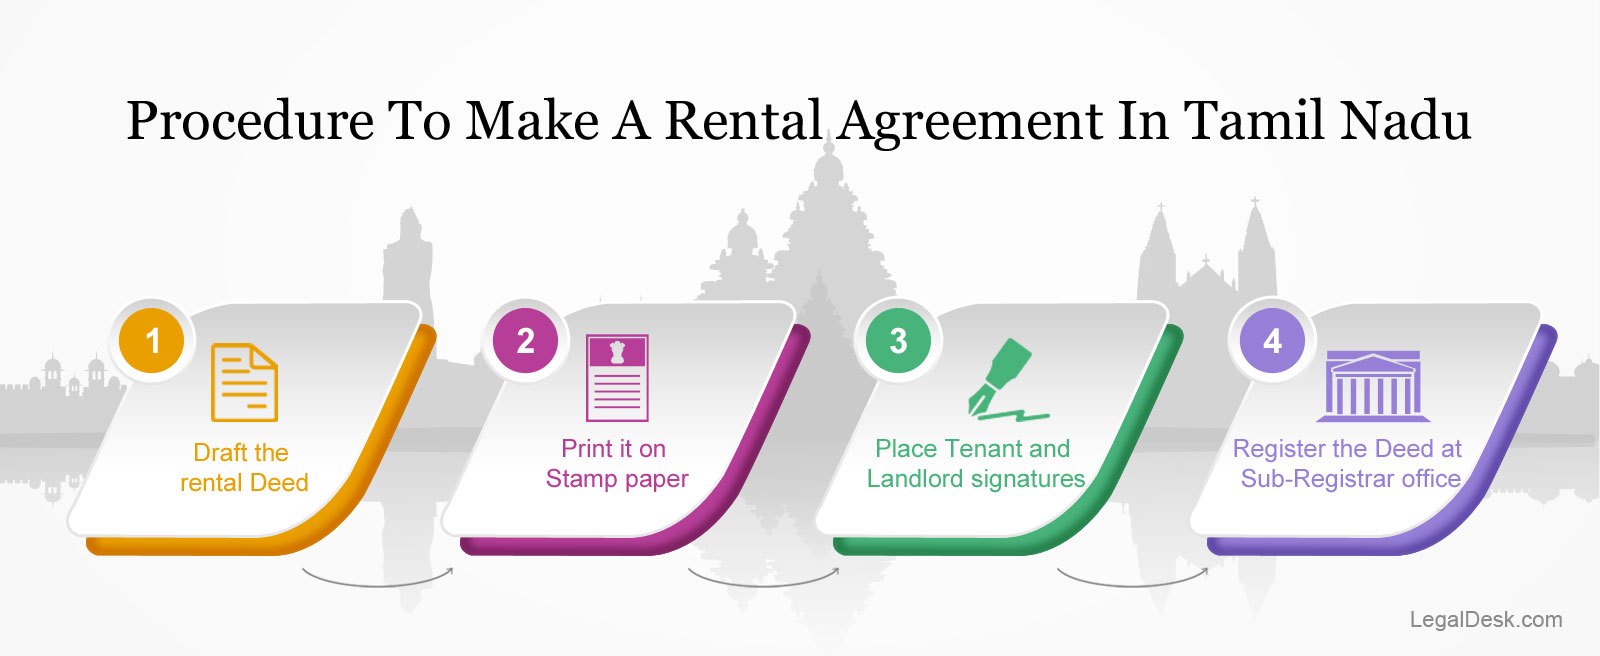 Procedure-for-rental-agreement-in-tamil-nadu